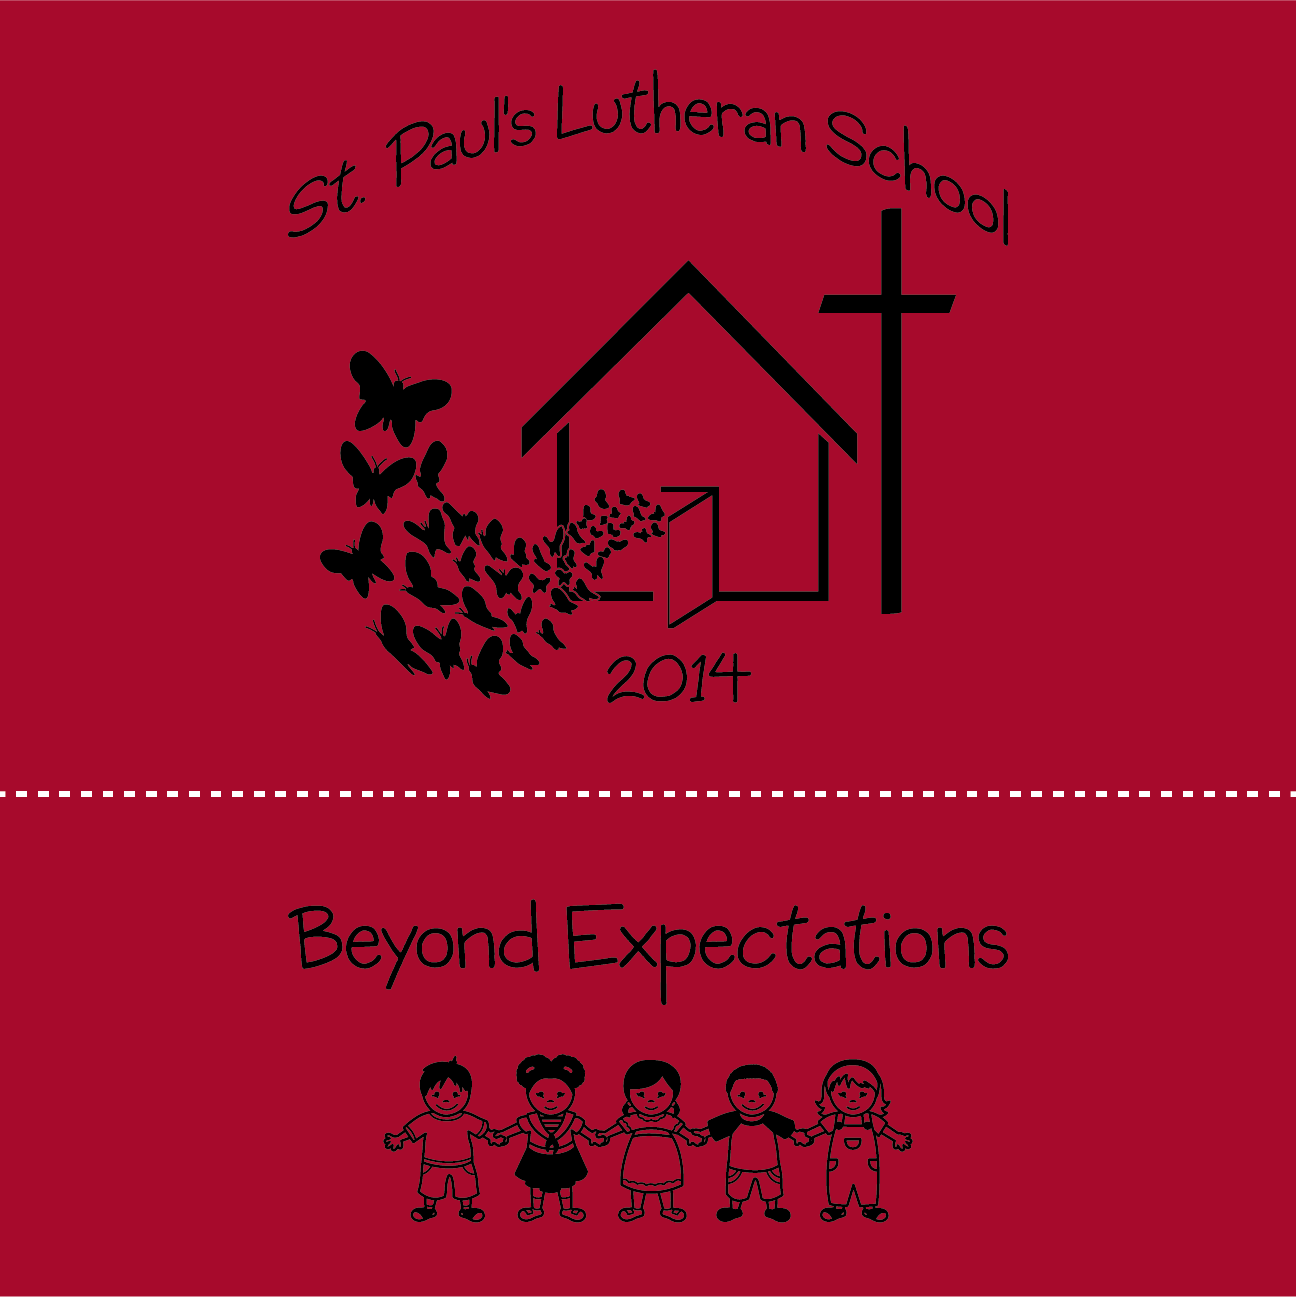 SPLS St. Paul's Lutheran School Field Trip and Volunteer Shirt shirt design - zoomed